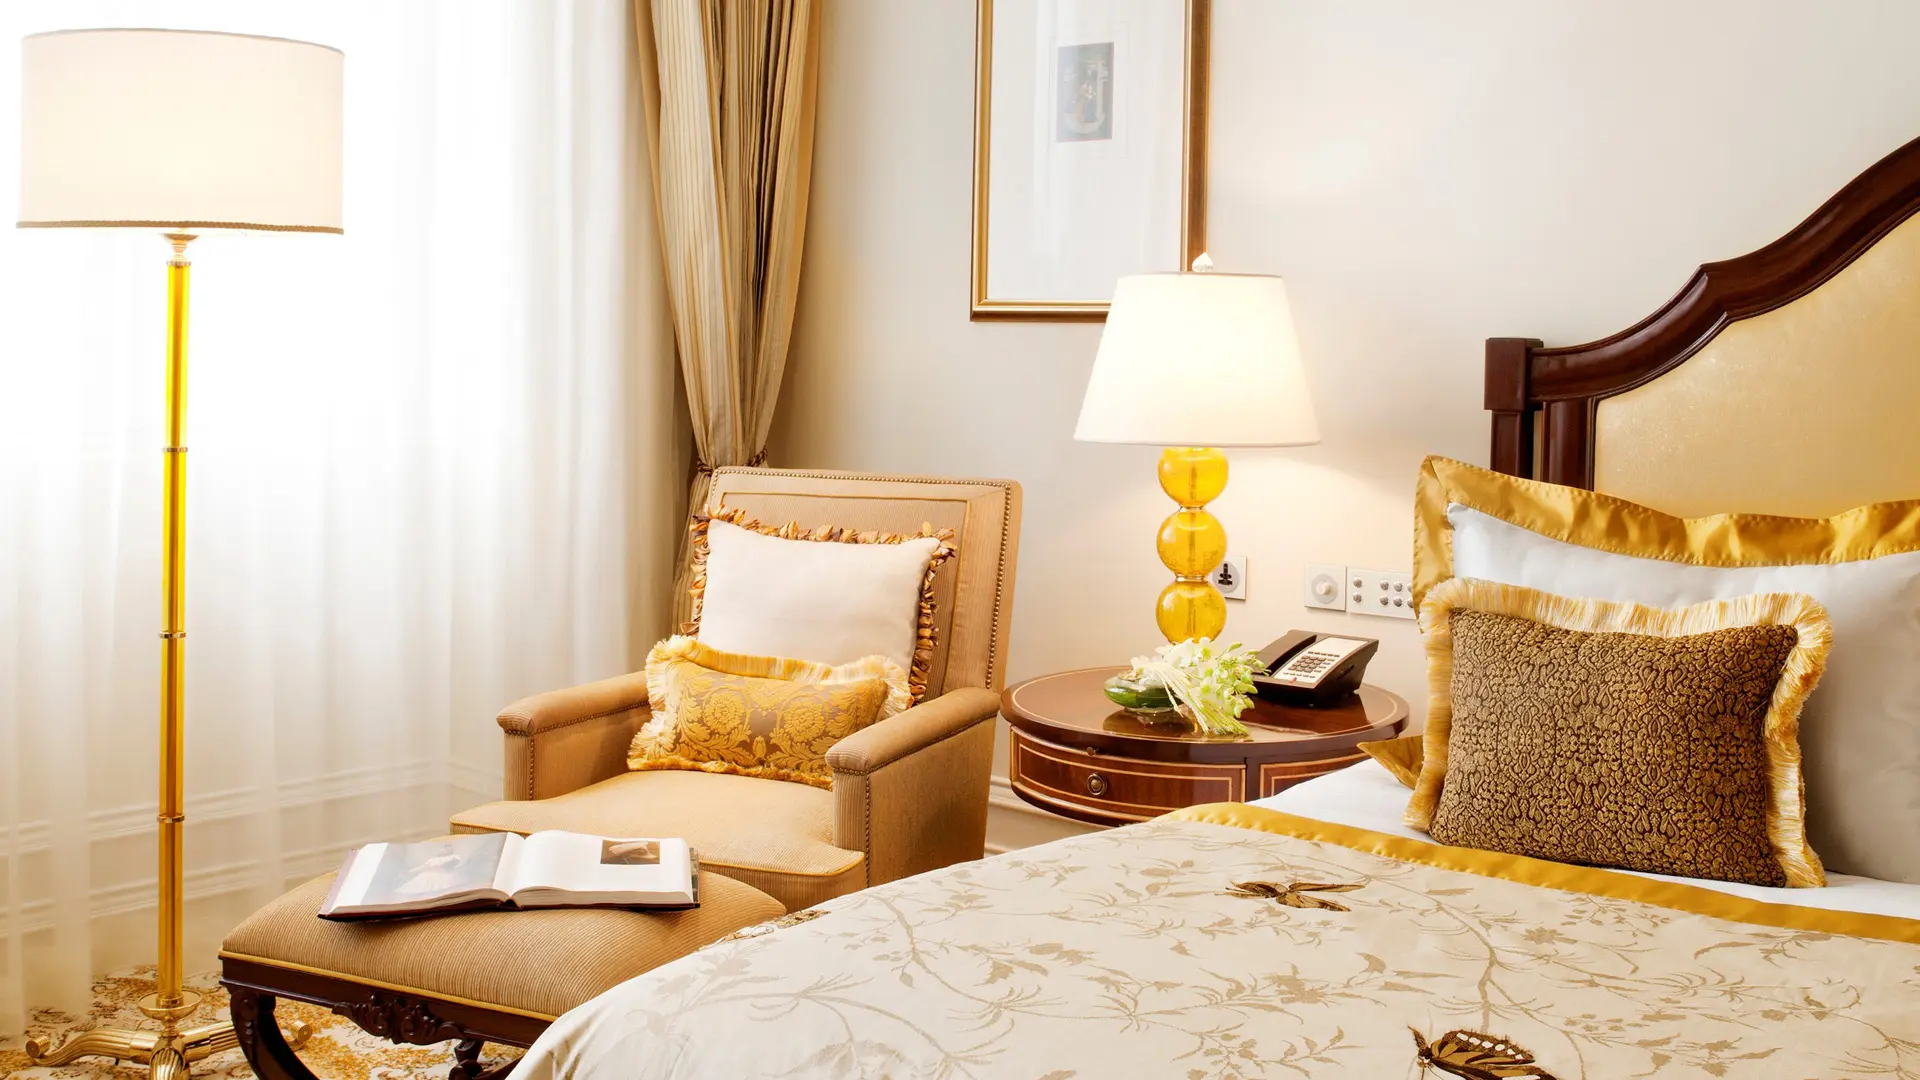 Hotel review Accommodation' - The Taj Mahal Palace - 5